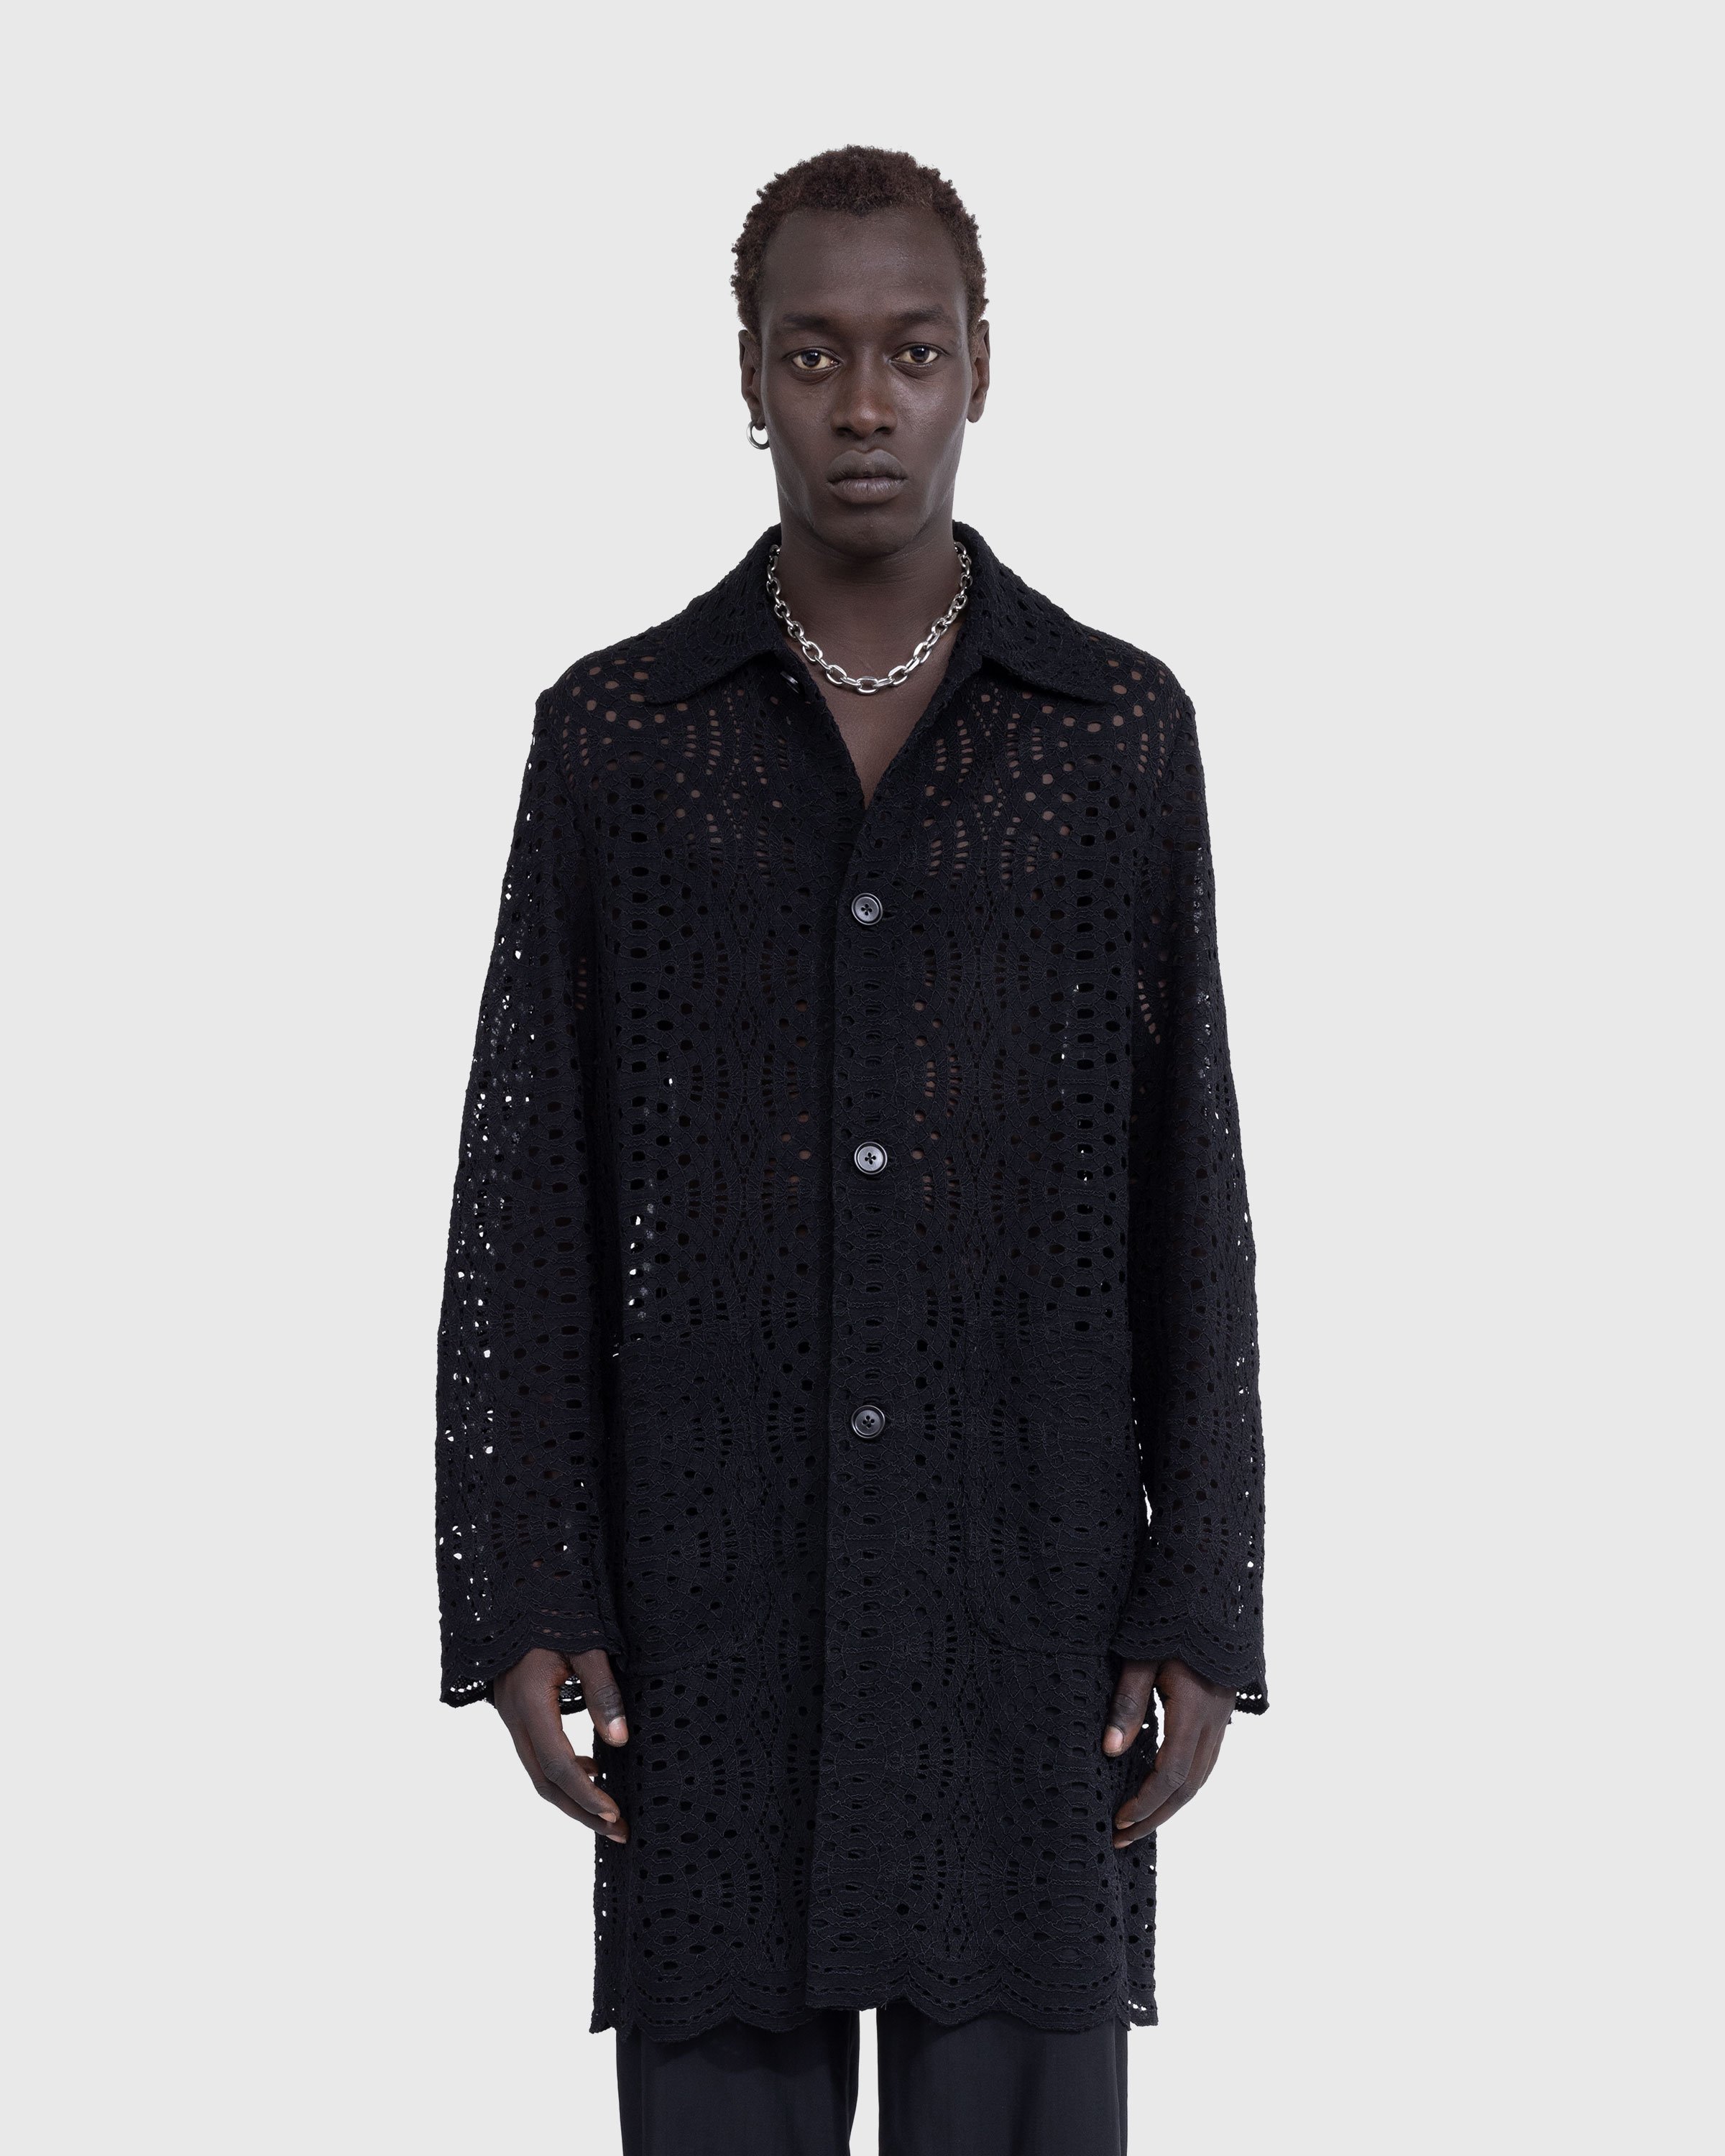 Dries van Noten - RAKIN COAT - Clothing - Black - Image 2